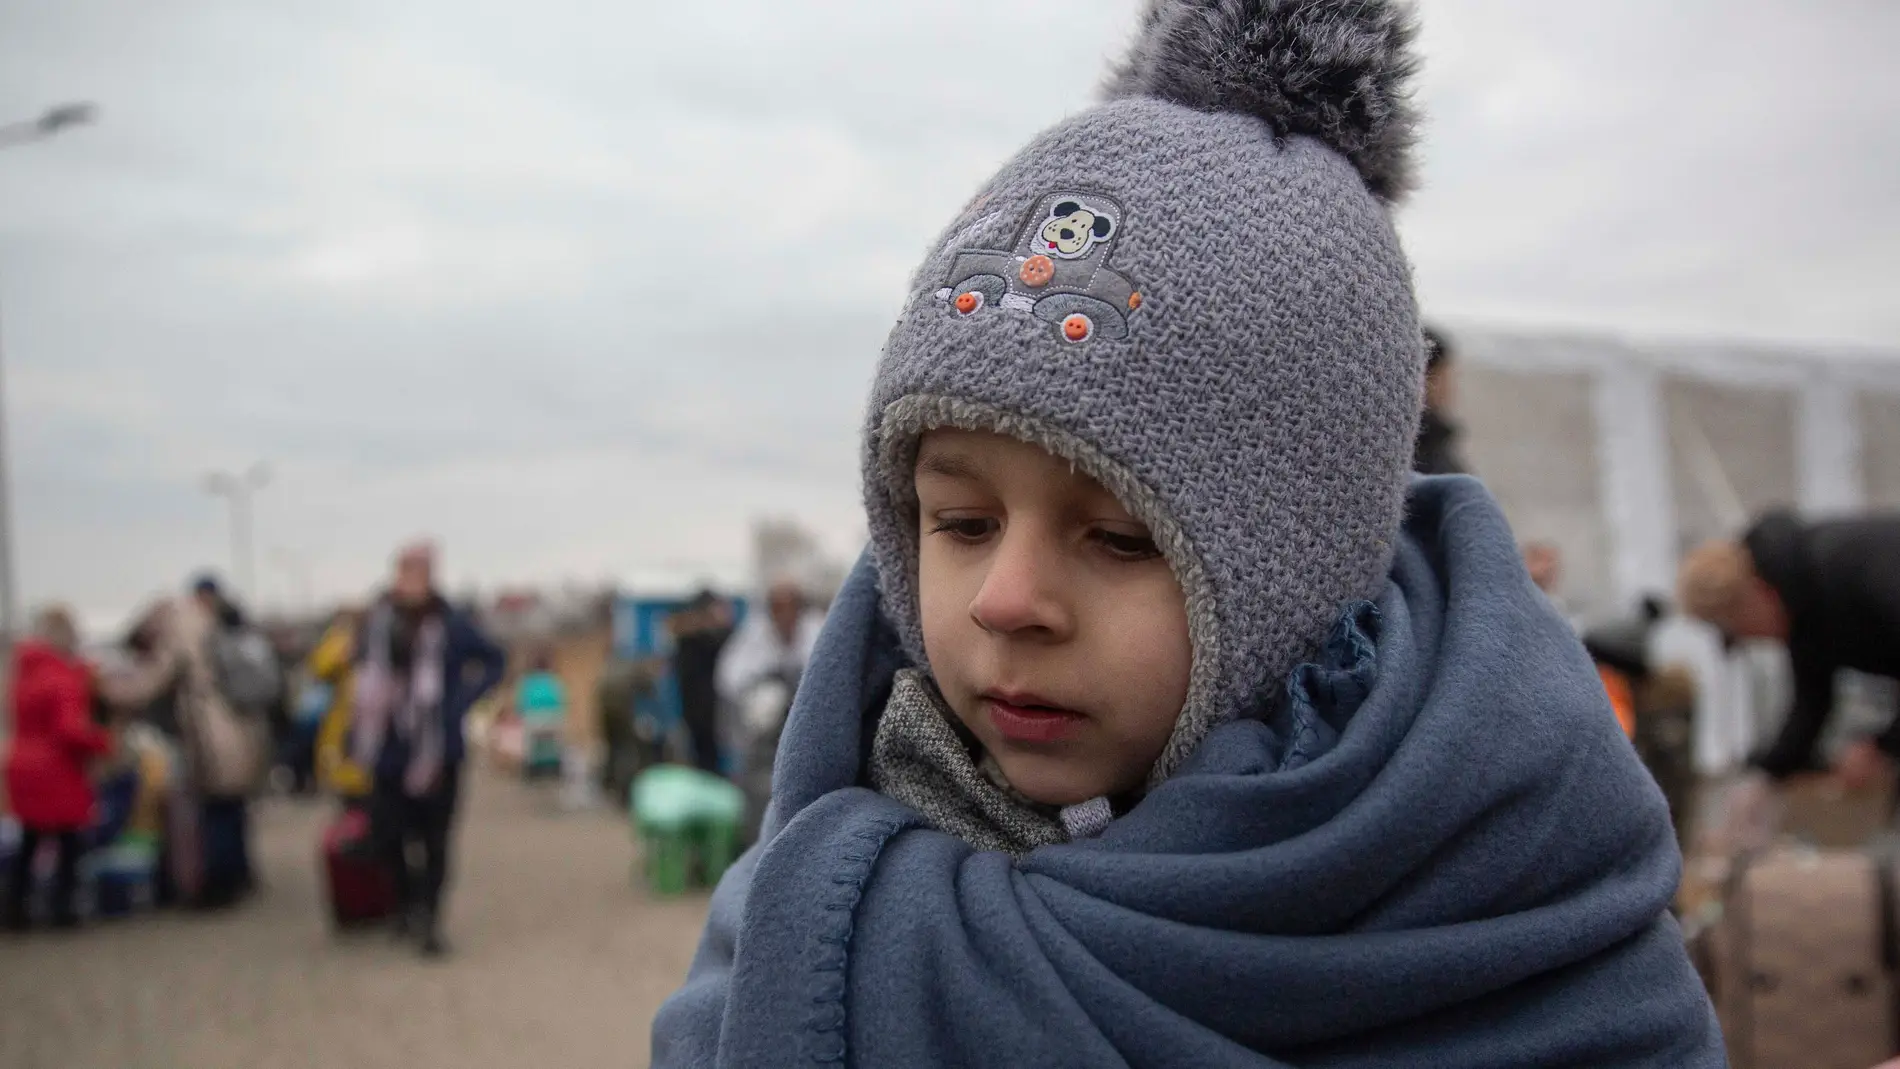 Un niño refugiado ucraniano llega a Medyka, Polonia